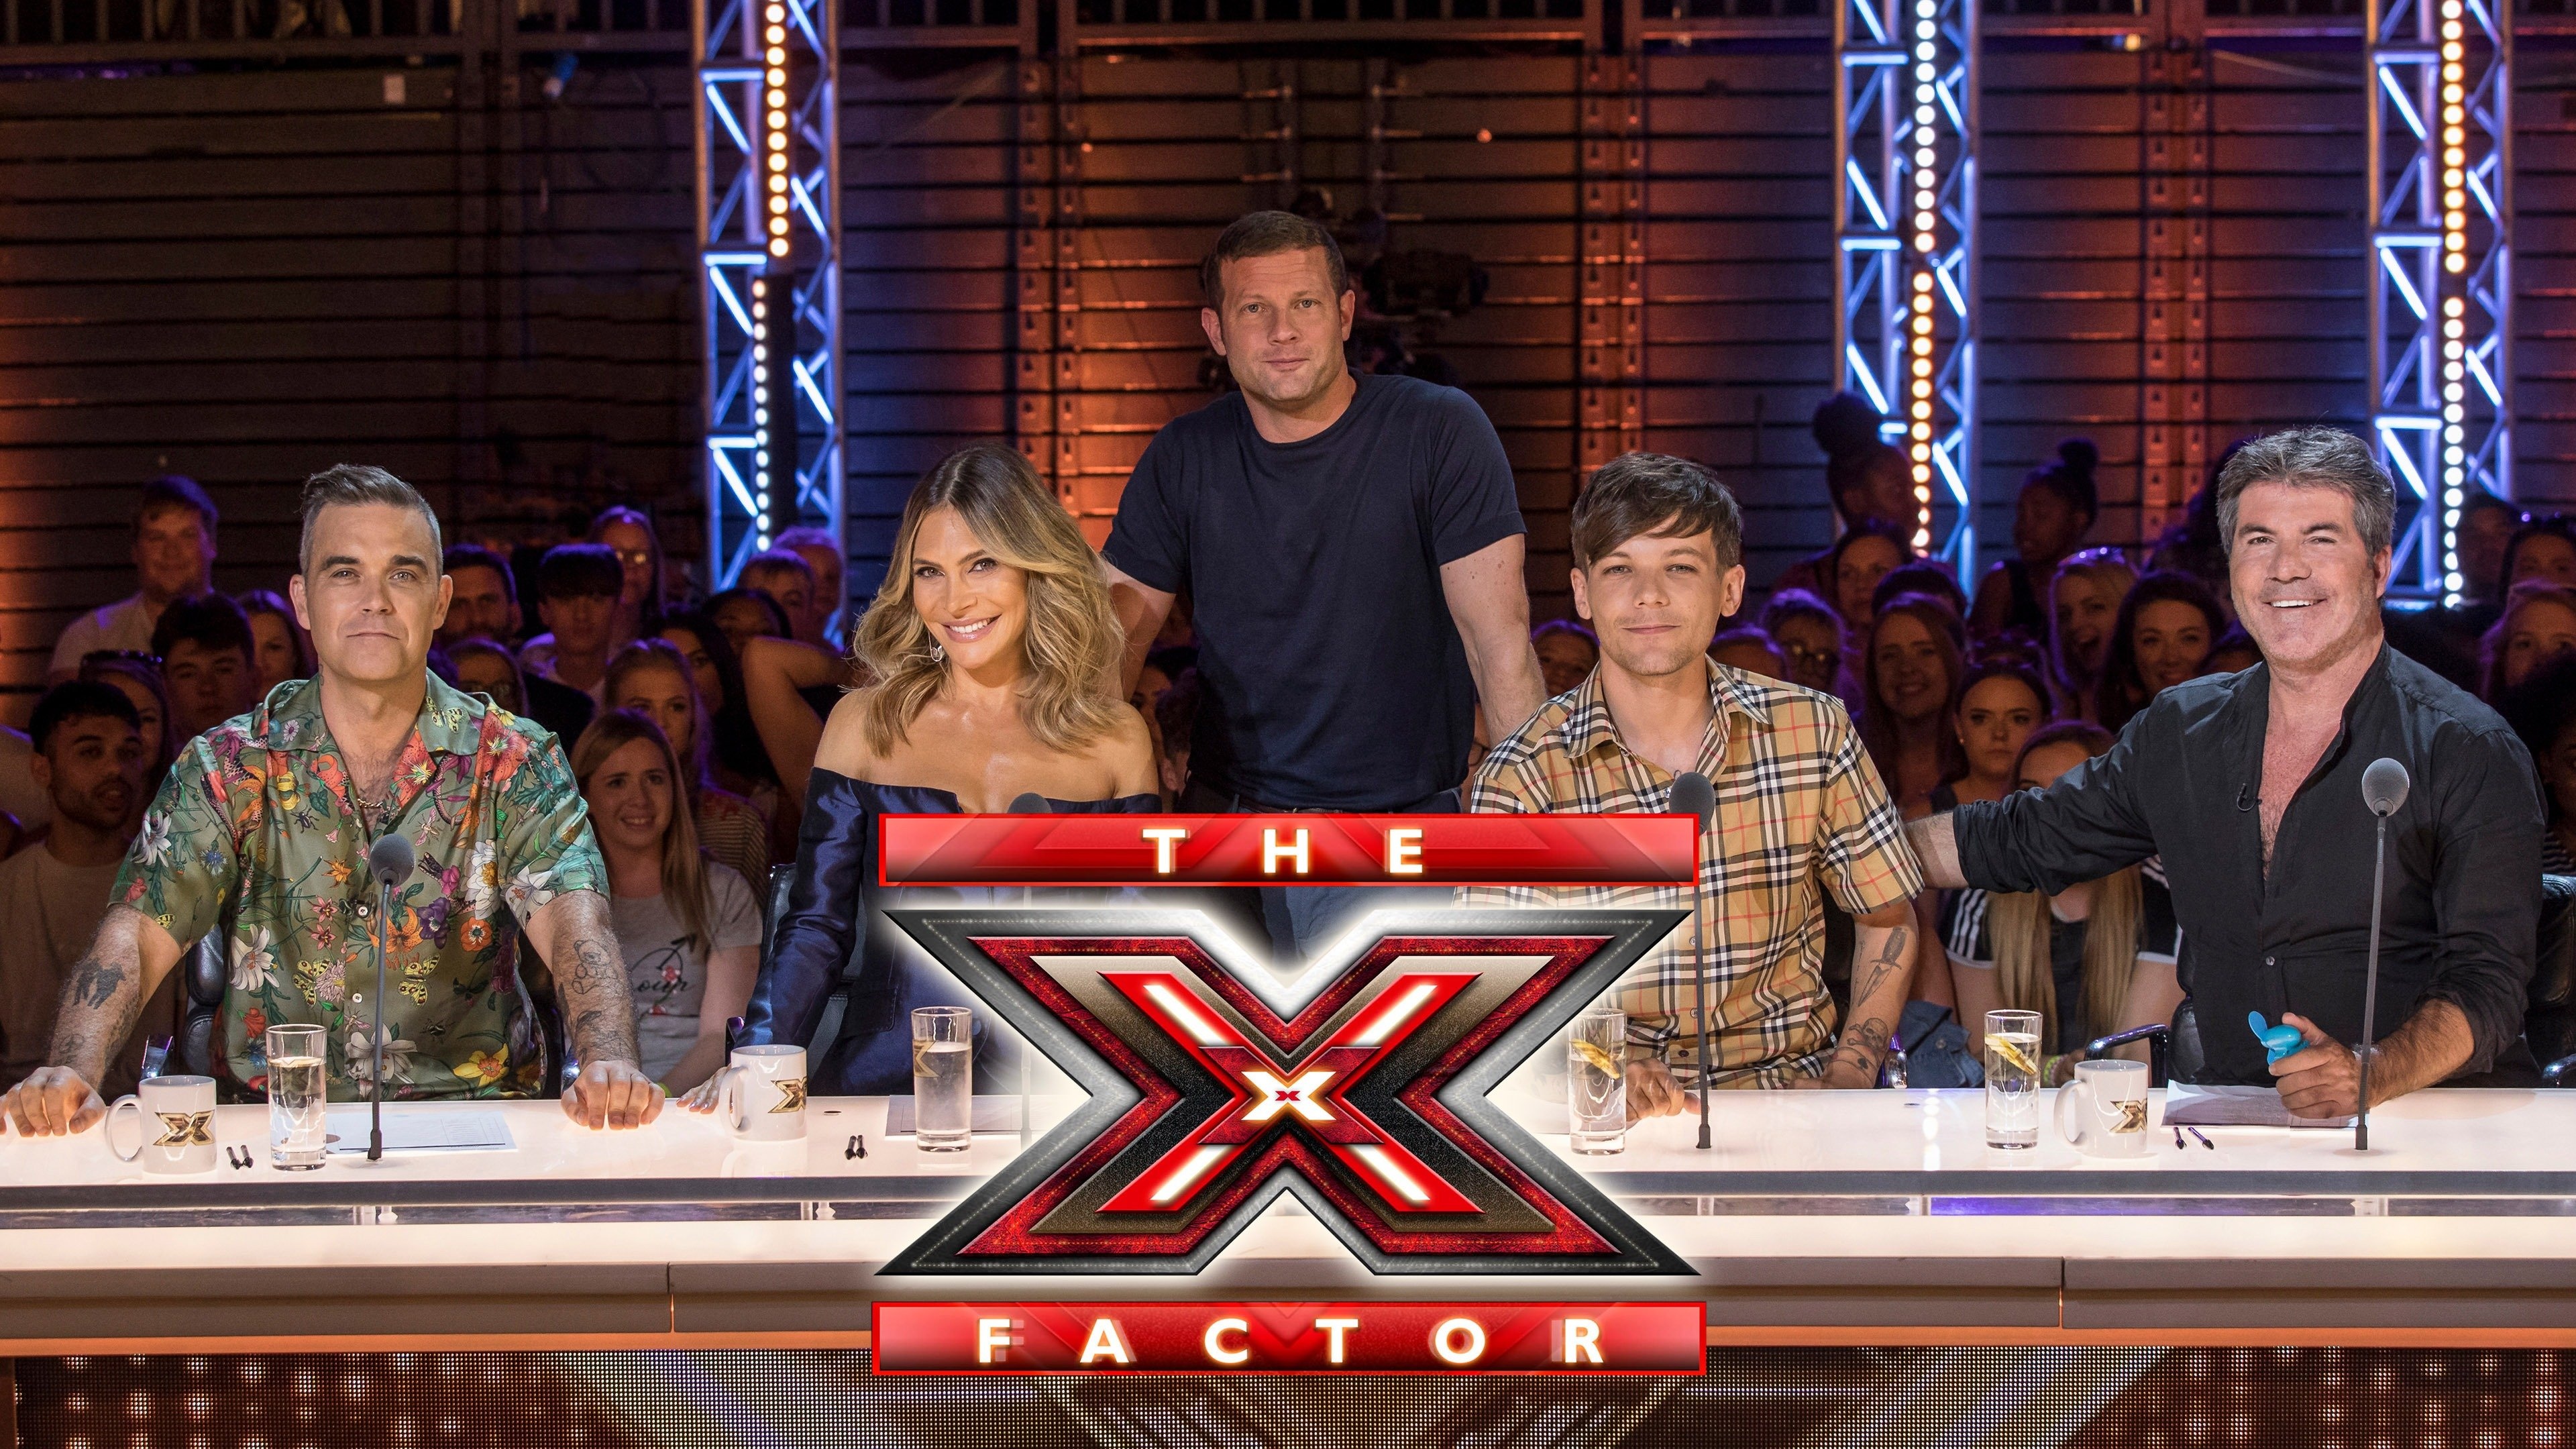 The X Factor, Watch TV series online, Plex platform, 3840x2160 4K Desktop